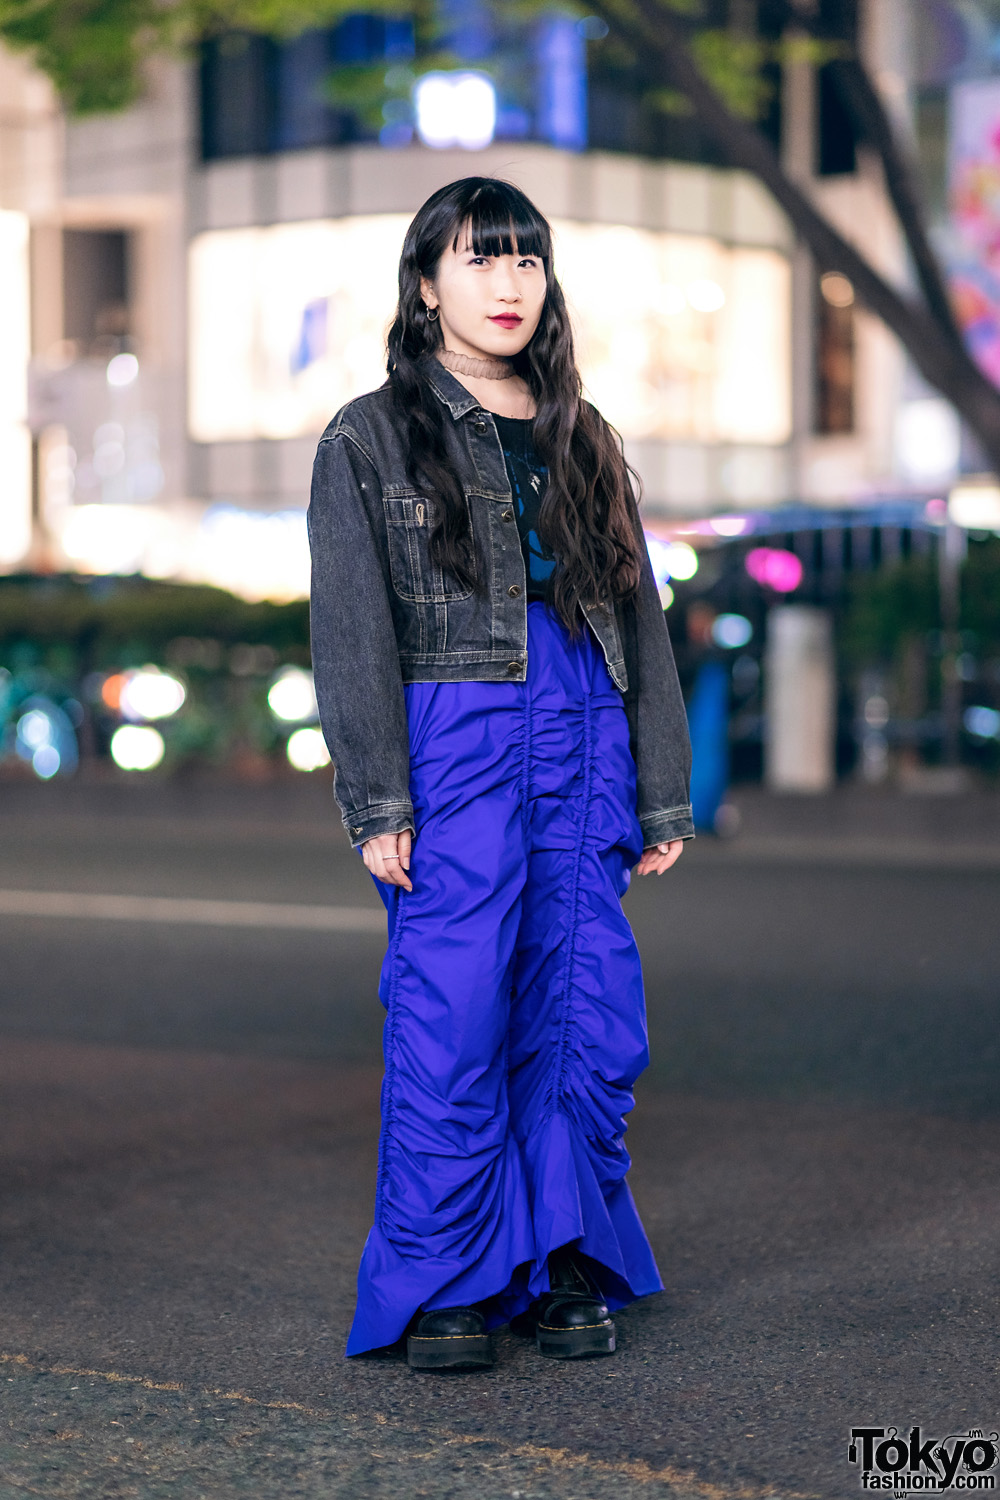 Tokyo Streetwear Style w/ Black Denim Jacket, Purple Gathered Pants & Dr. Martens Boots